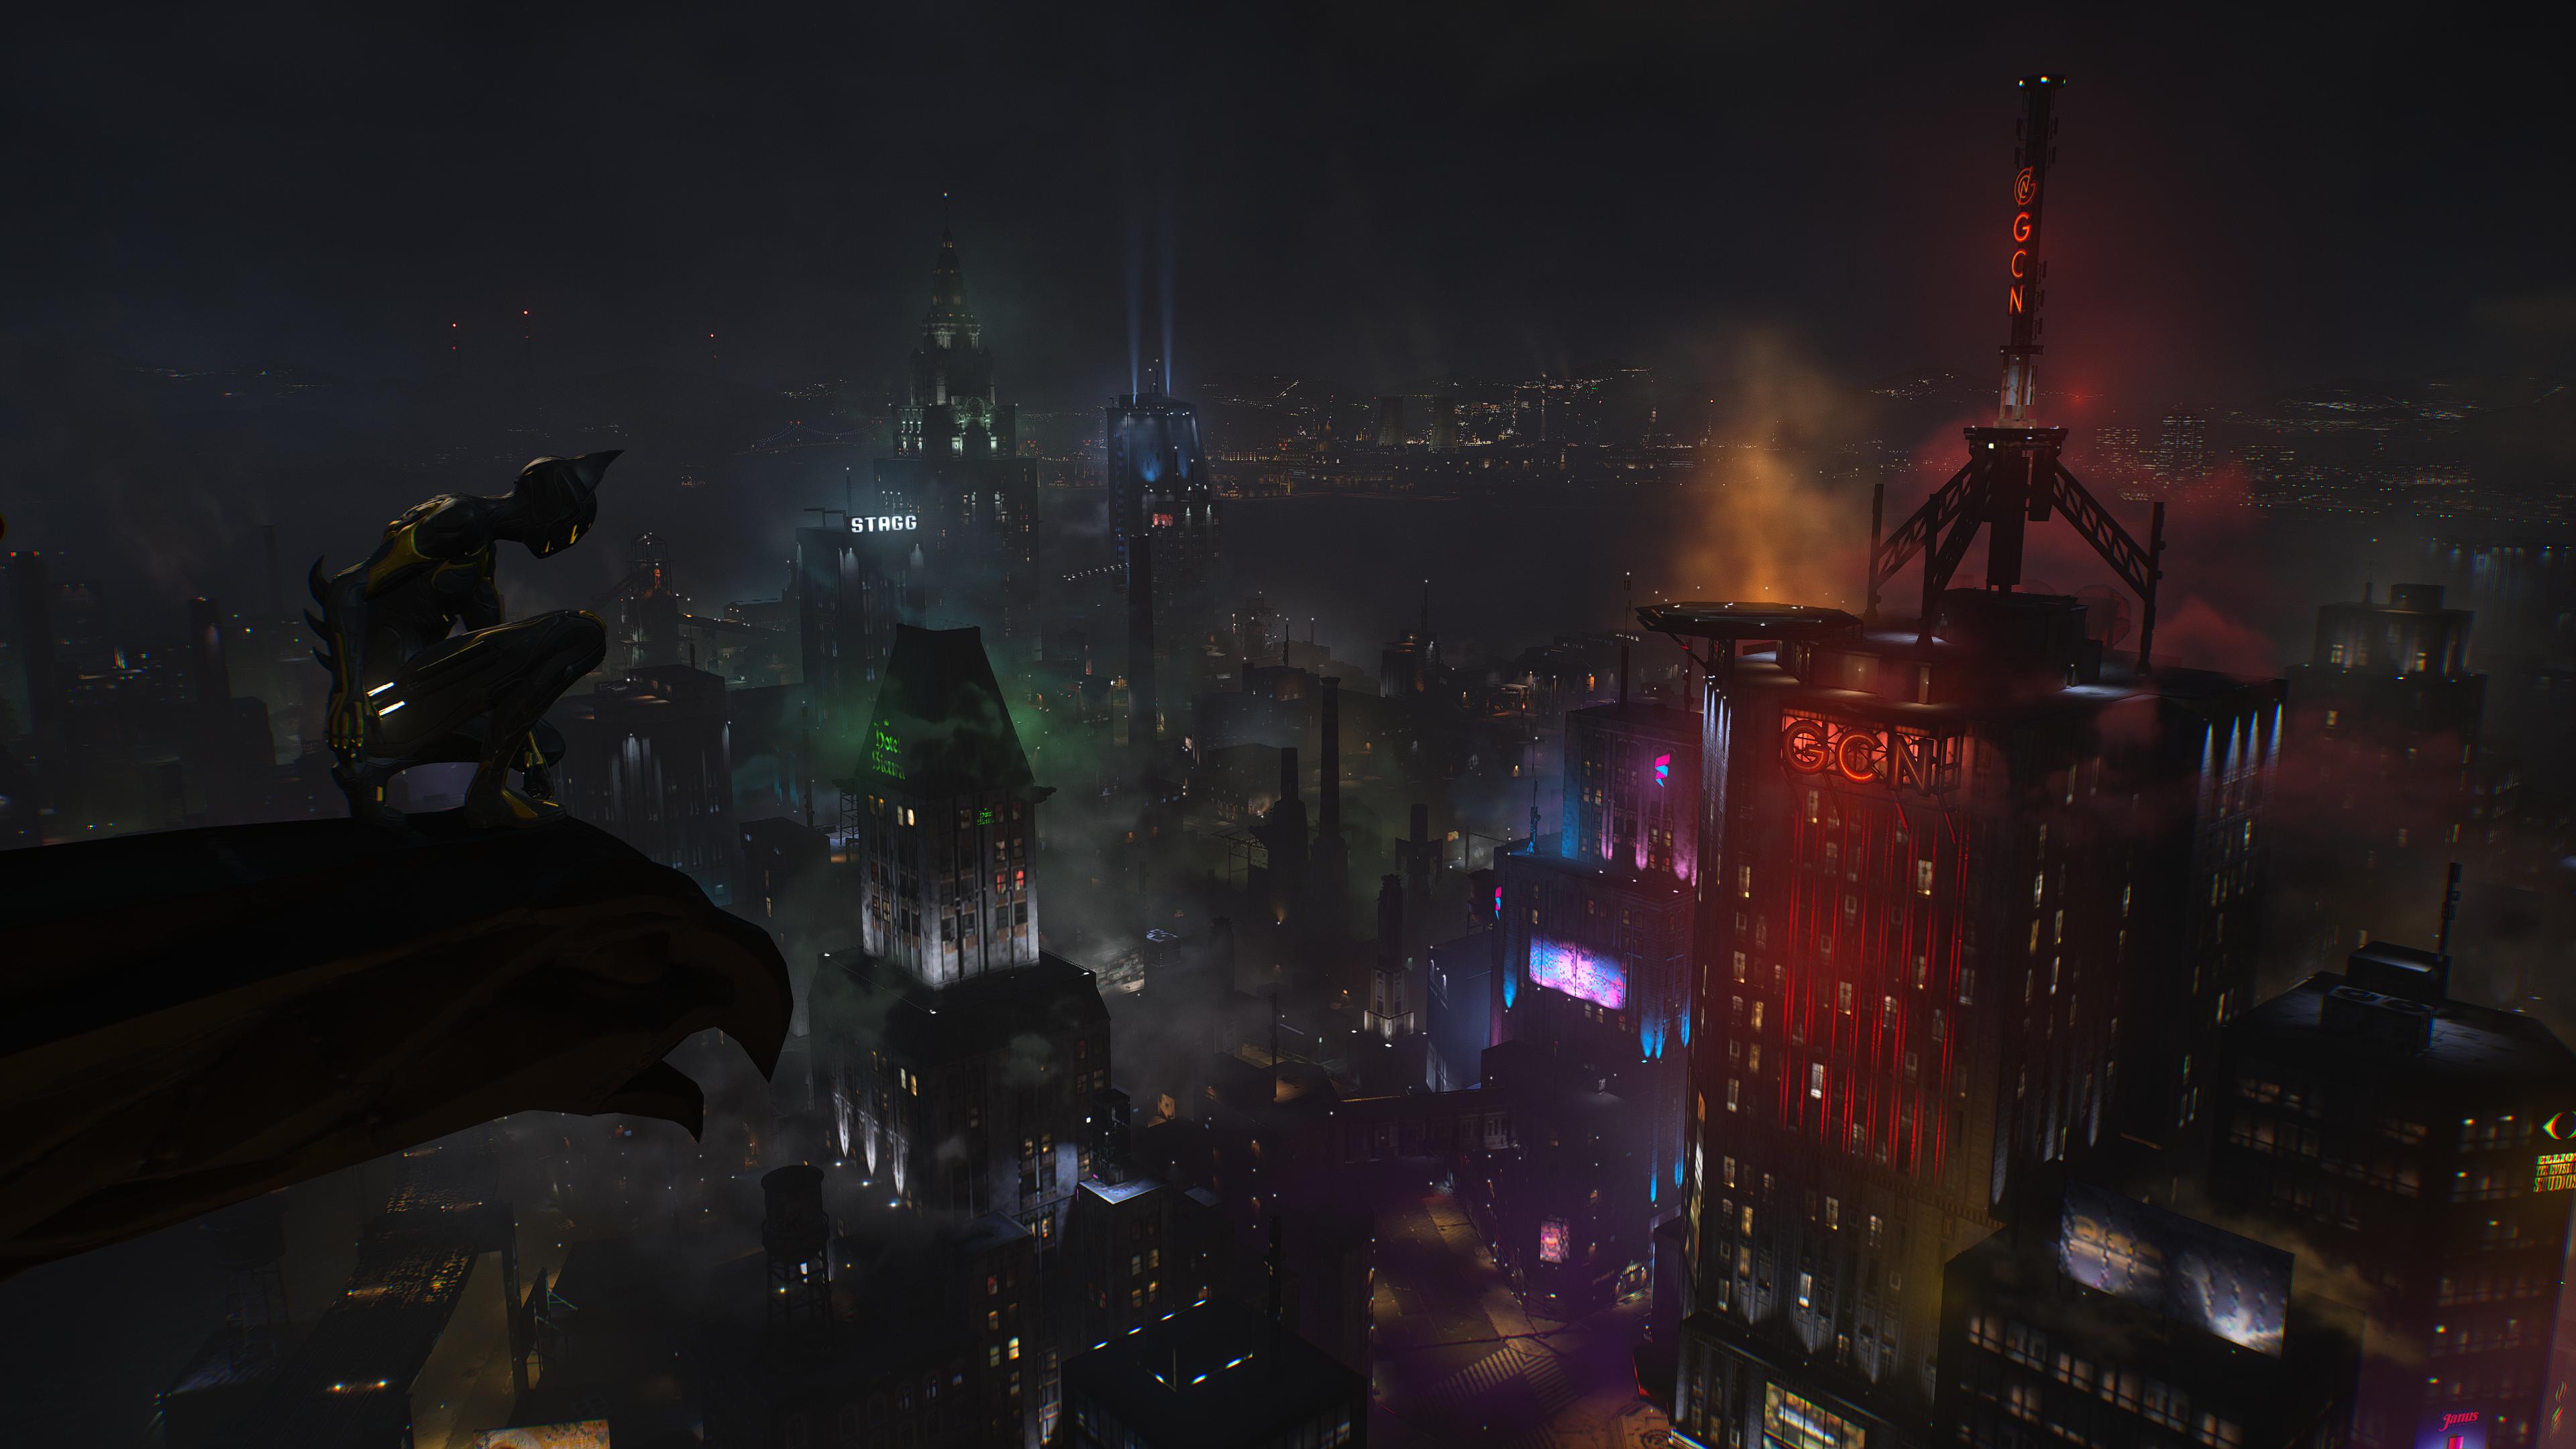 Gotham Knights Gets Major New Update